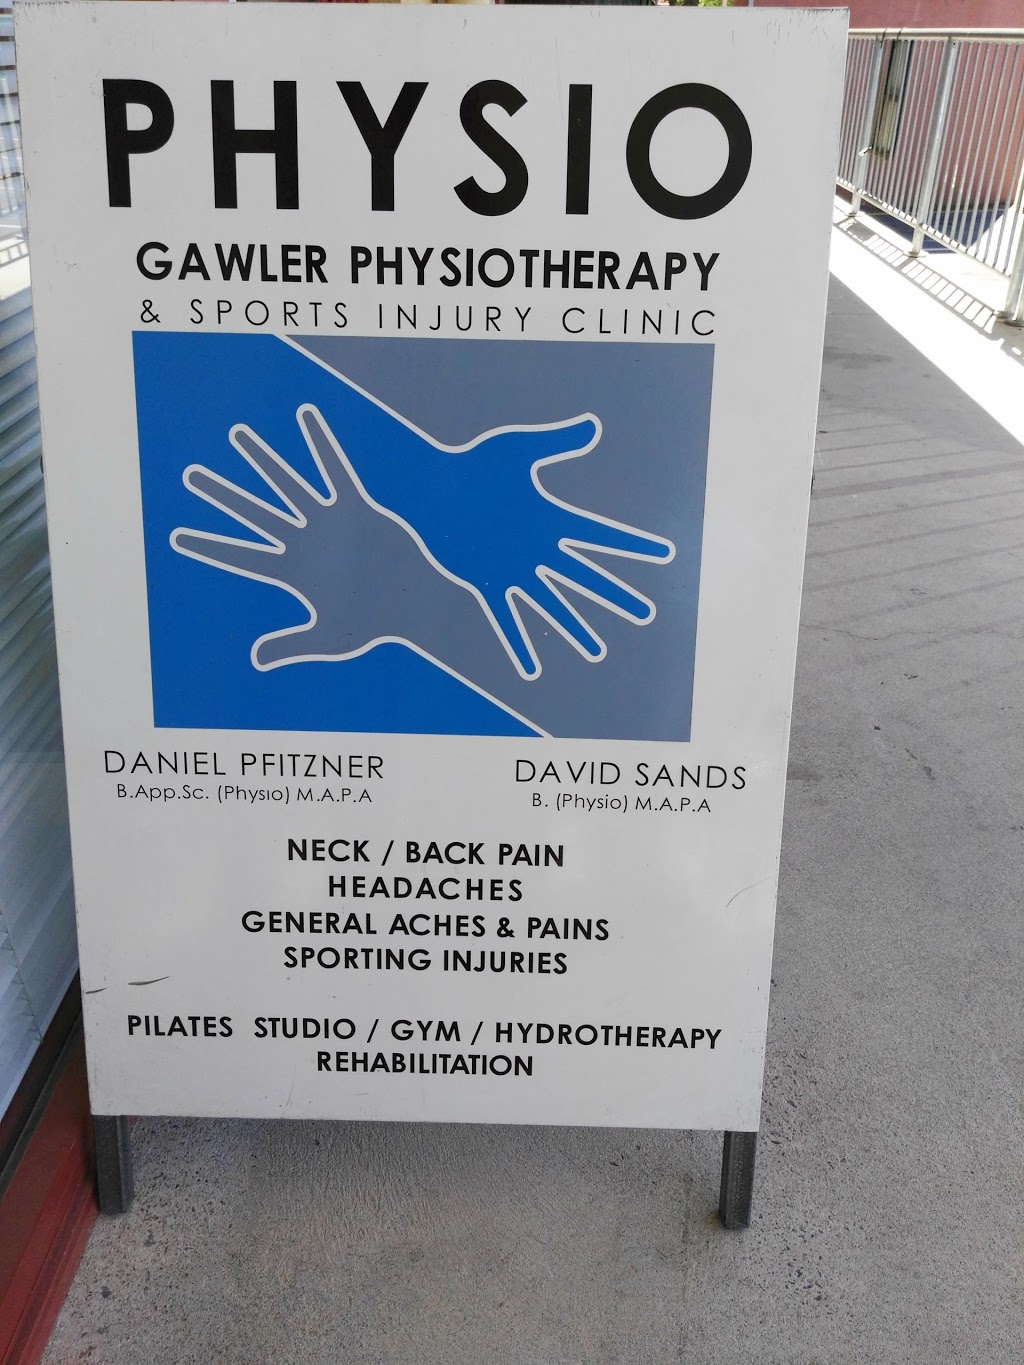 Gawler Physiotherapy & Sports Injury Clinic | health | 18 Alexander Ave, Evanston Park SA 5116, Australia | 0885232711 OR +61 8 8523 2711